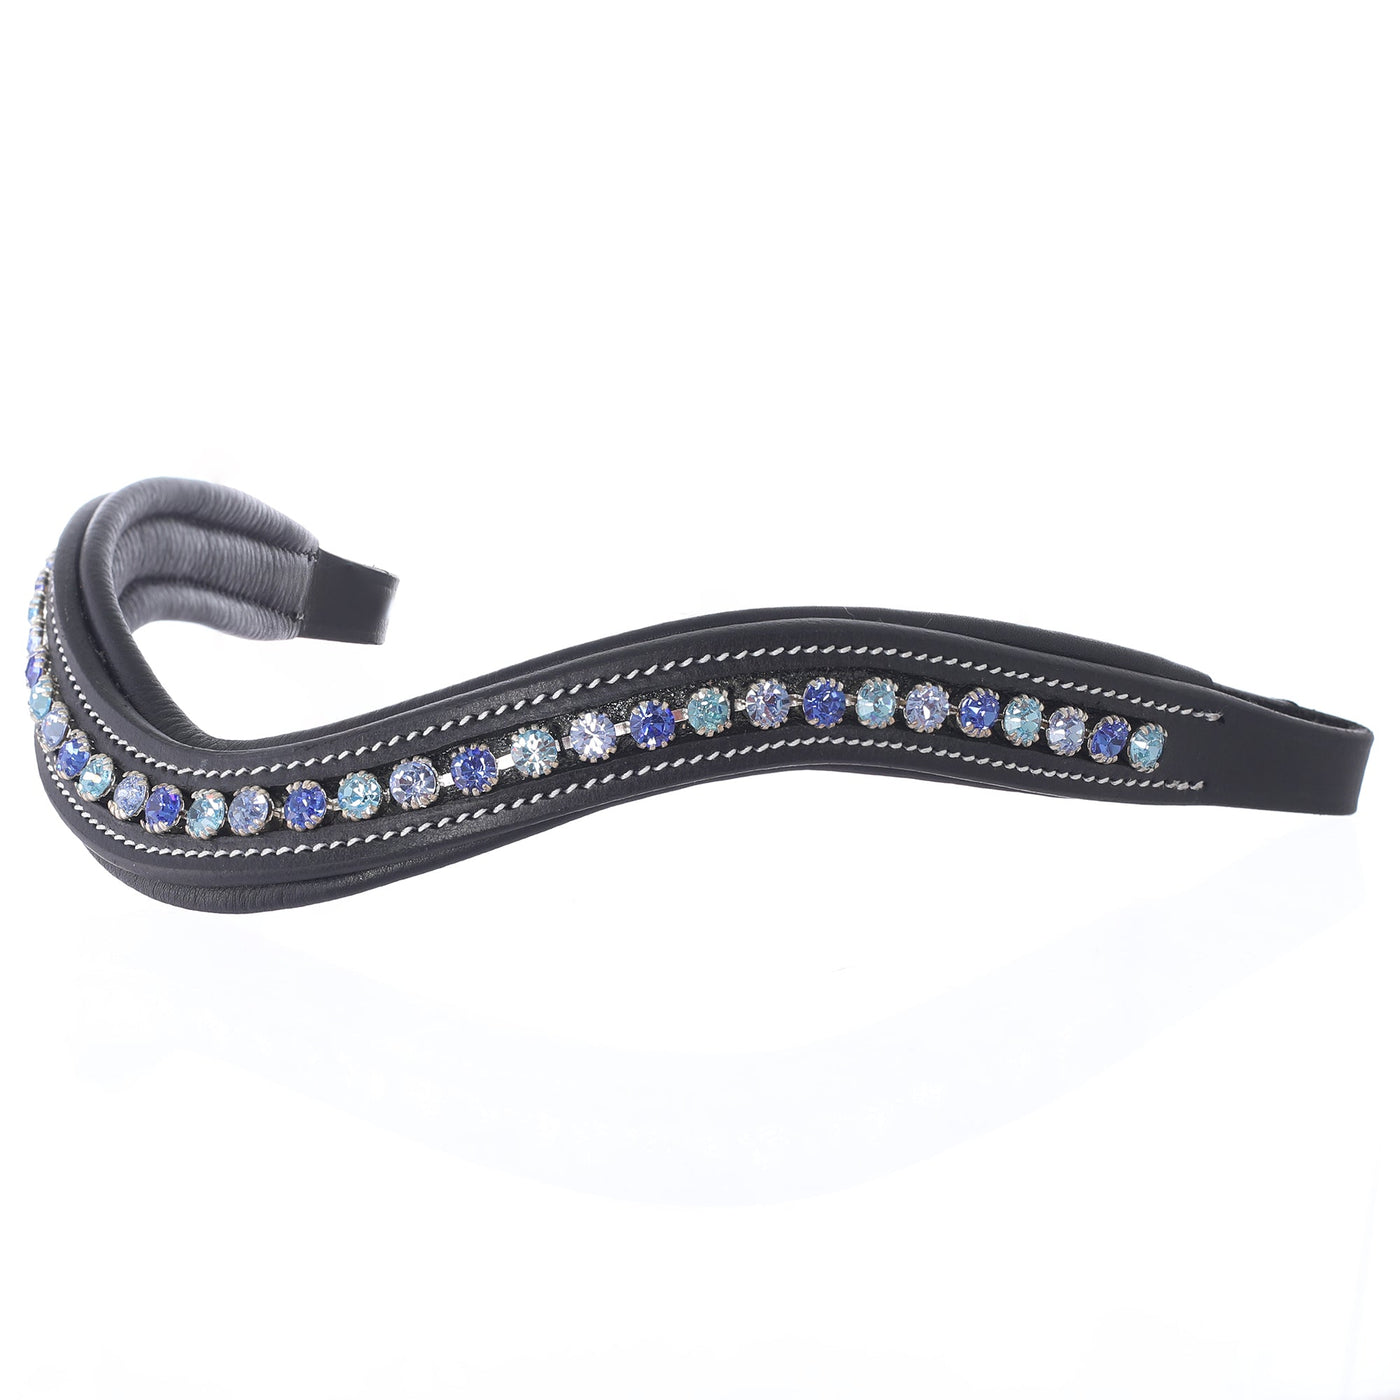 ExionPro Elegant Deep Curved Soft Padded Sapphire, Aqua Marine, Light Sapphire Colored Crystal Browband